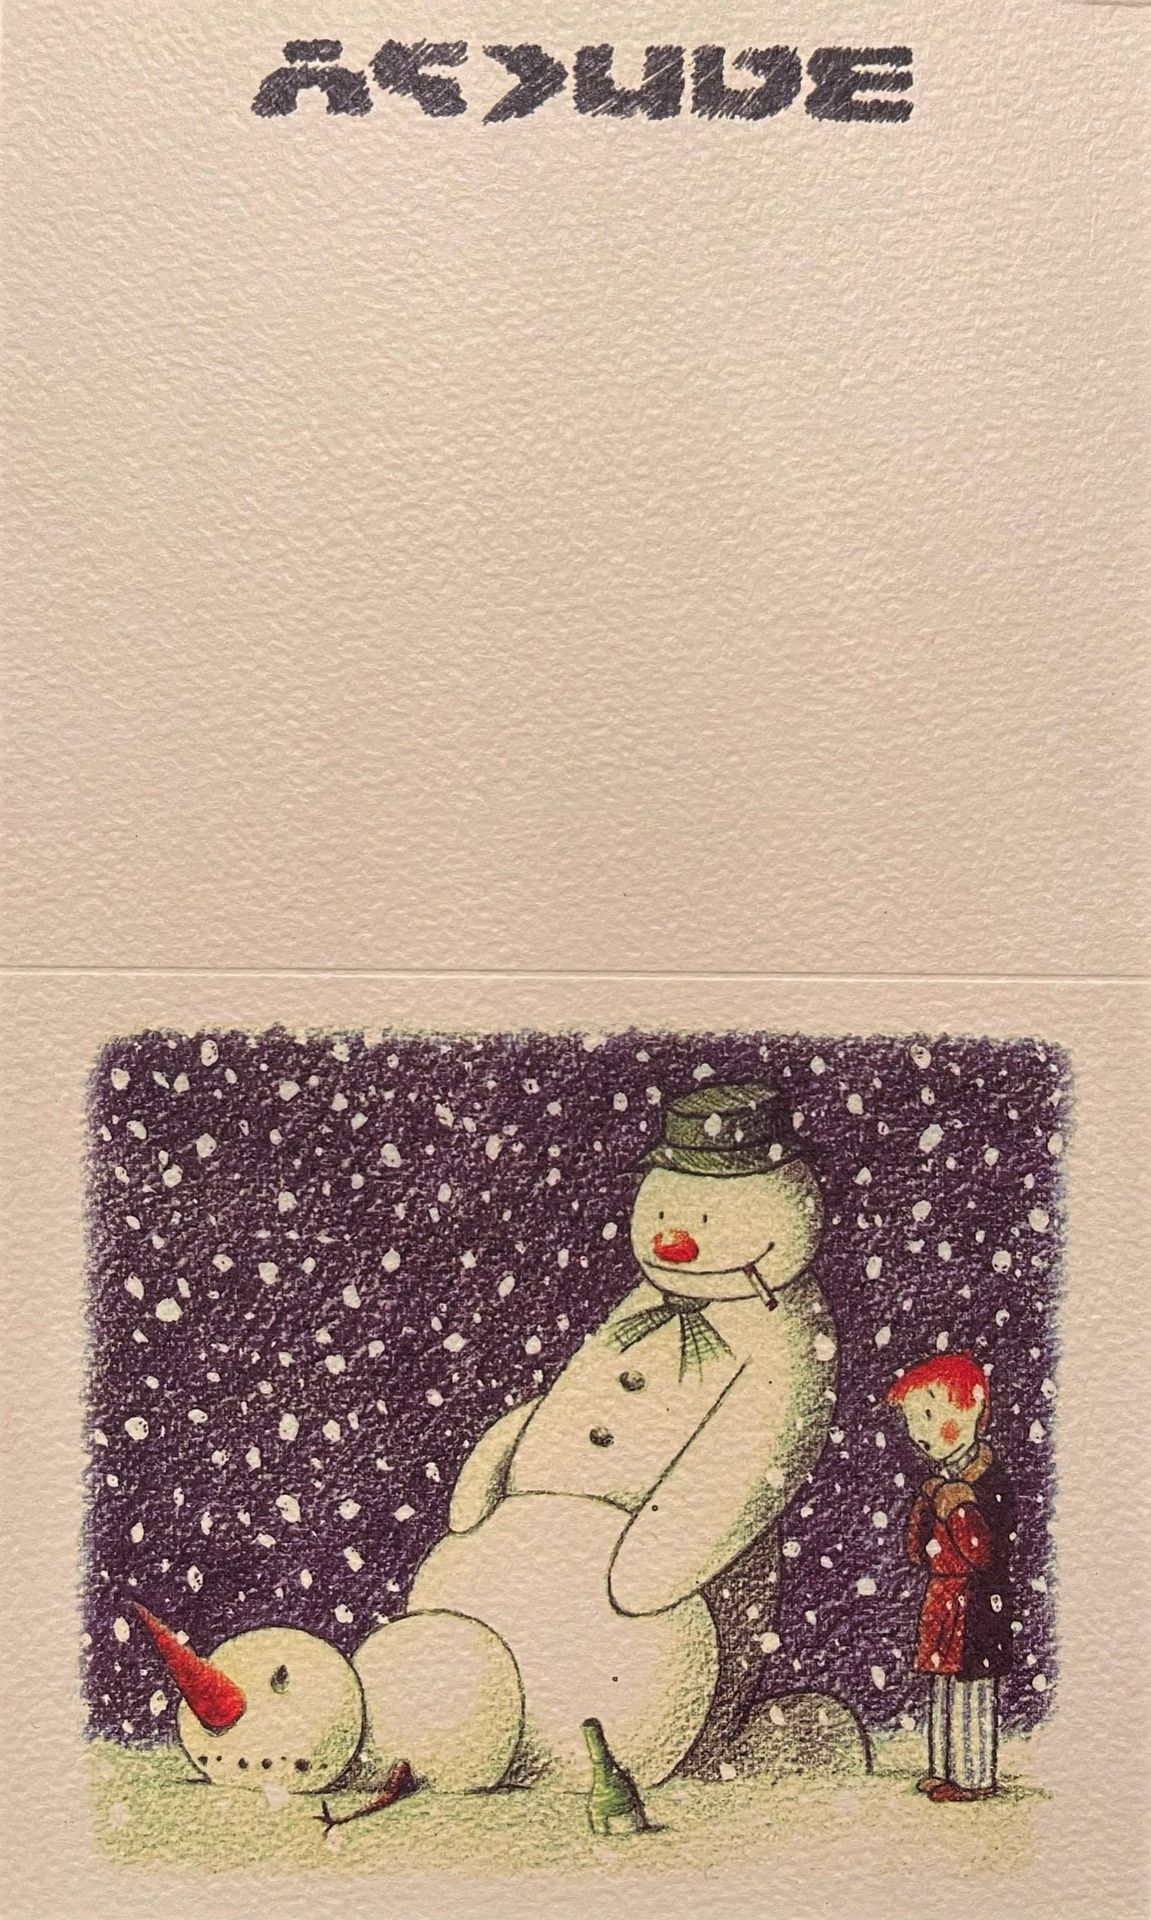 Null 班克西（后），《粗鲁的雪人》，2005年，纸上印刷品，明信片上有签名，为桑塔斯犹太区制作，限量版无编号，29 x 17.5厘米